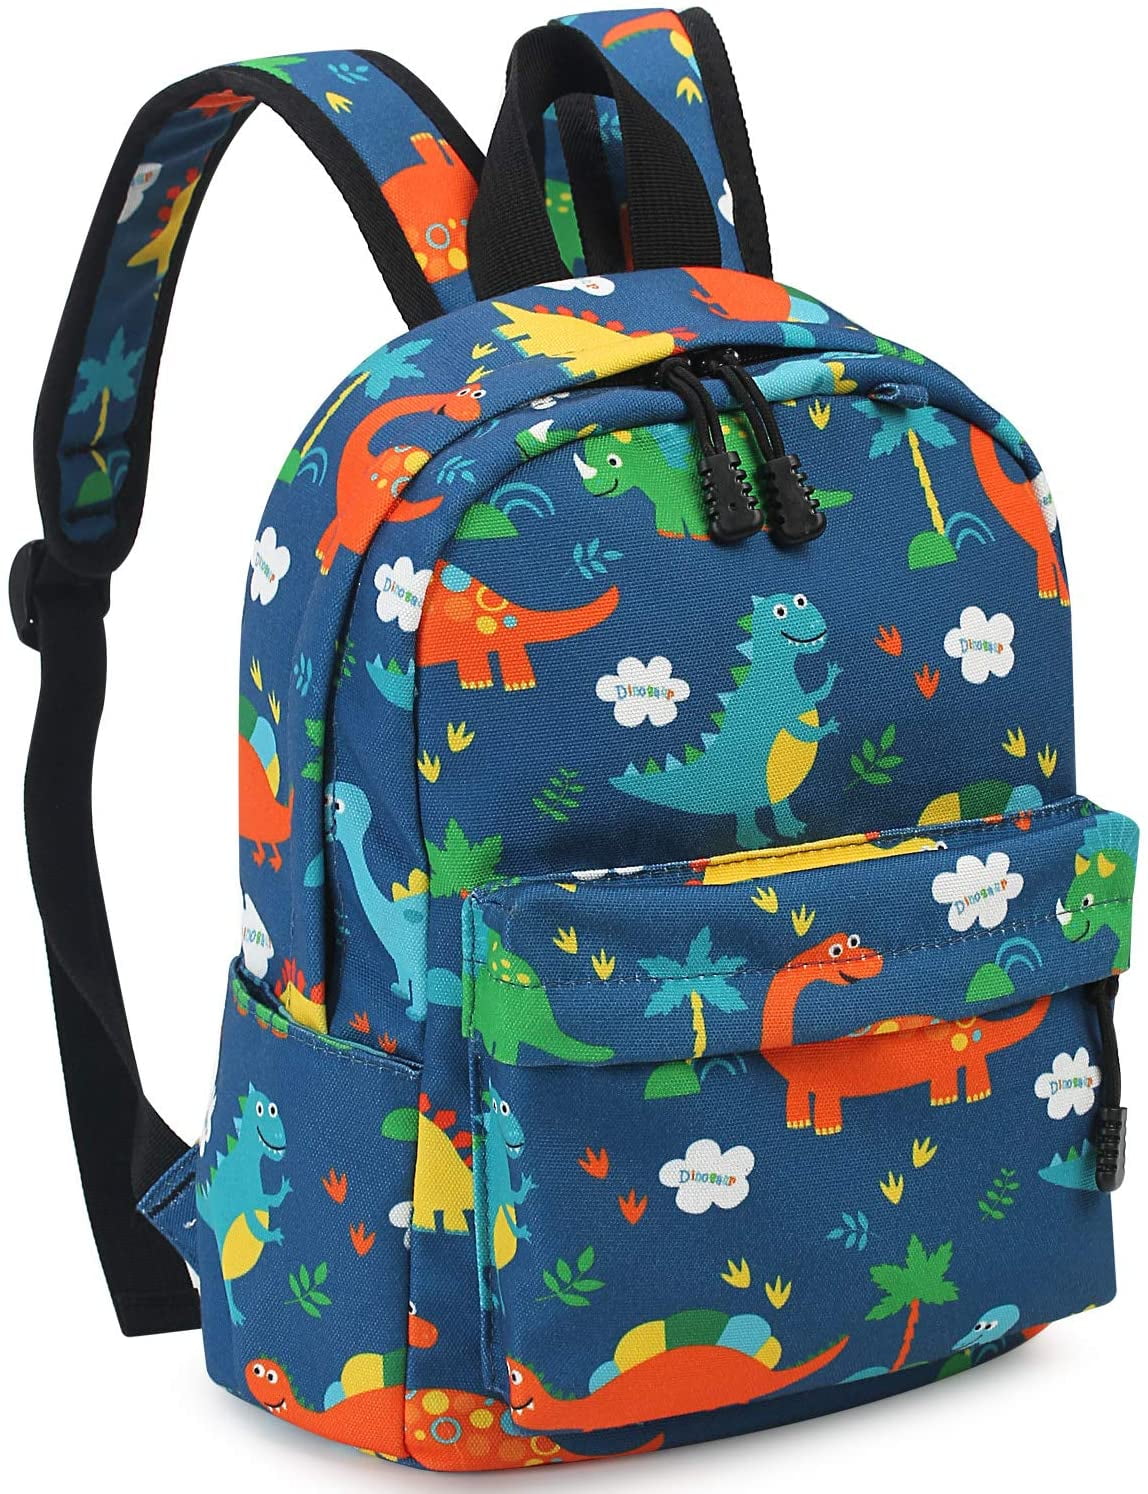 Kindergarten schoolbag Dinosaur boy cute cartoon backpack quality kids ...